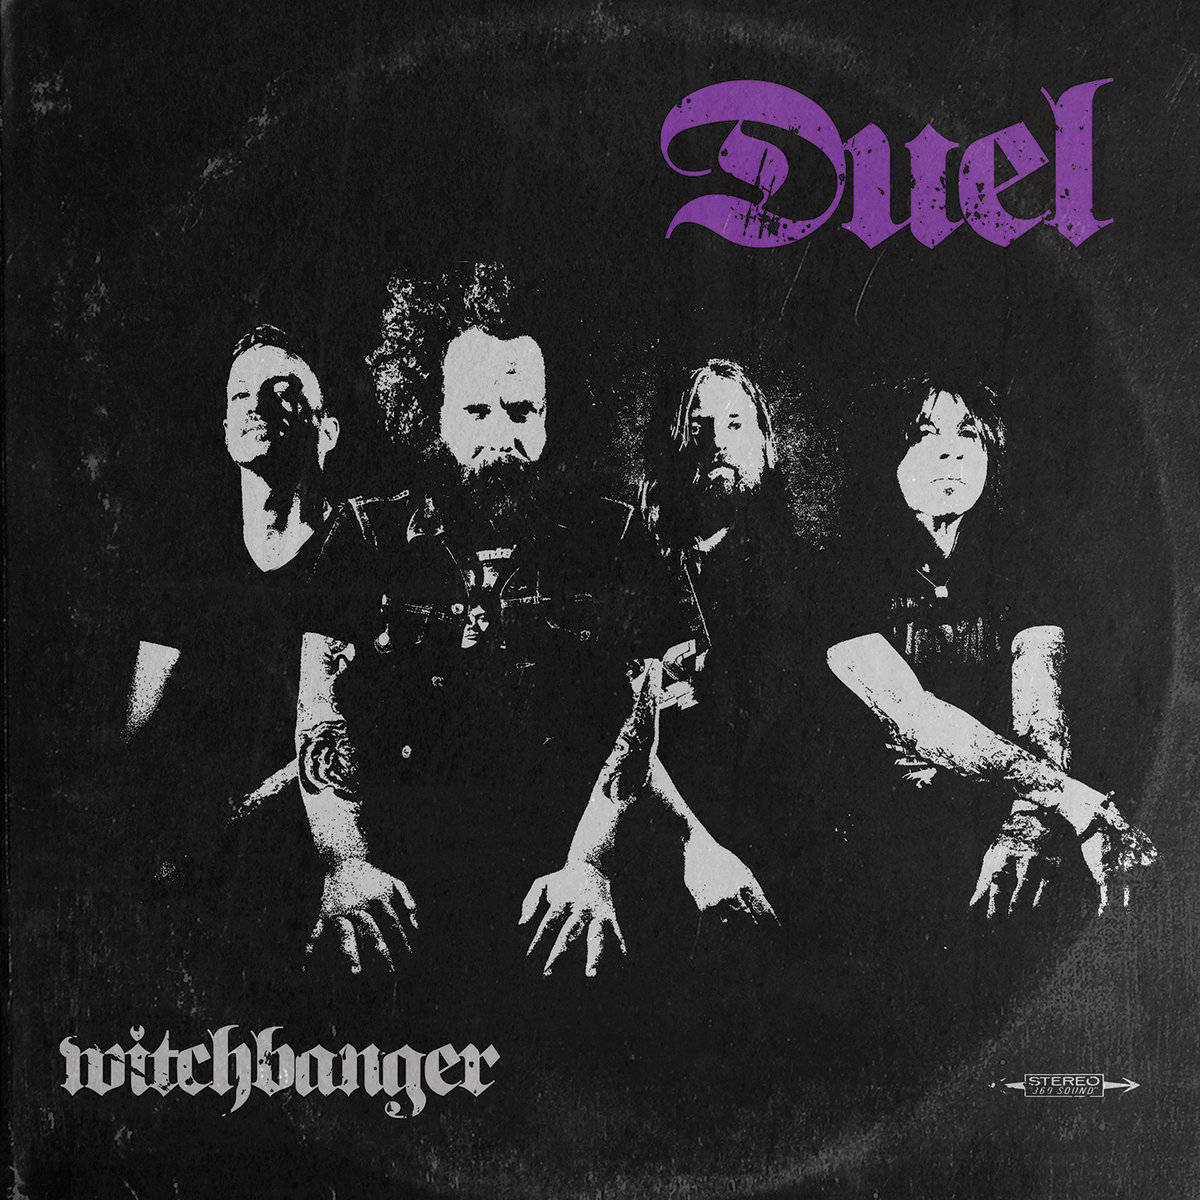 Duel - Witchbanger (Splatter Vinyl) - LP